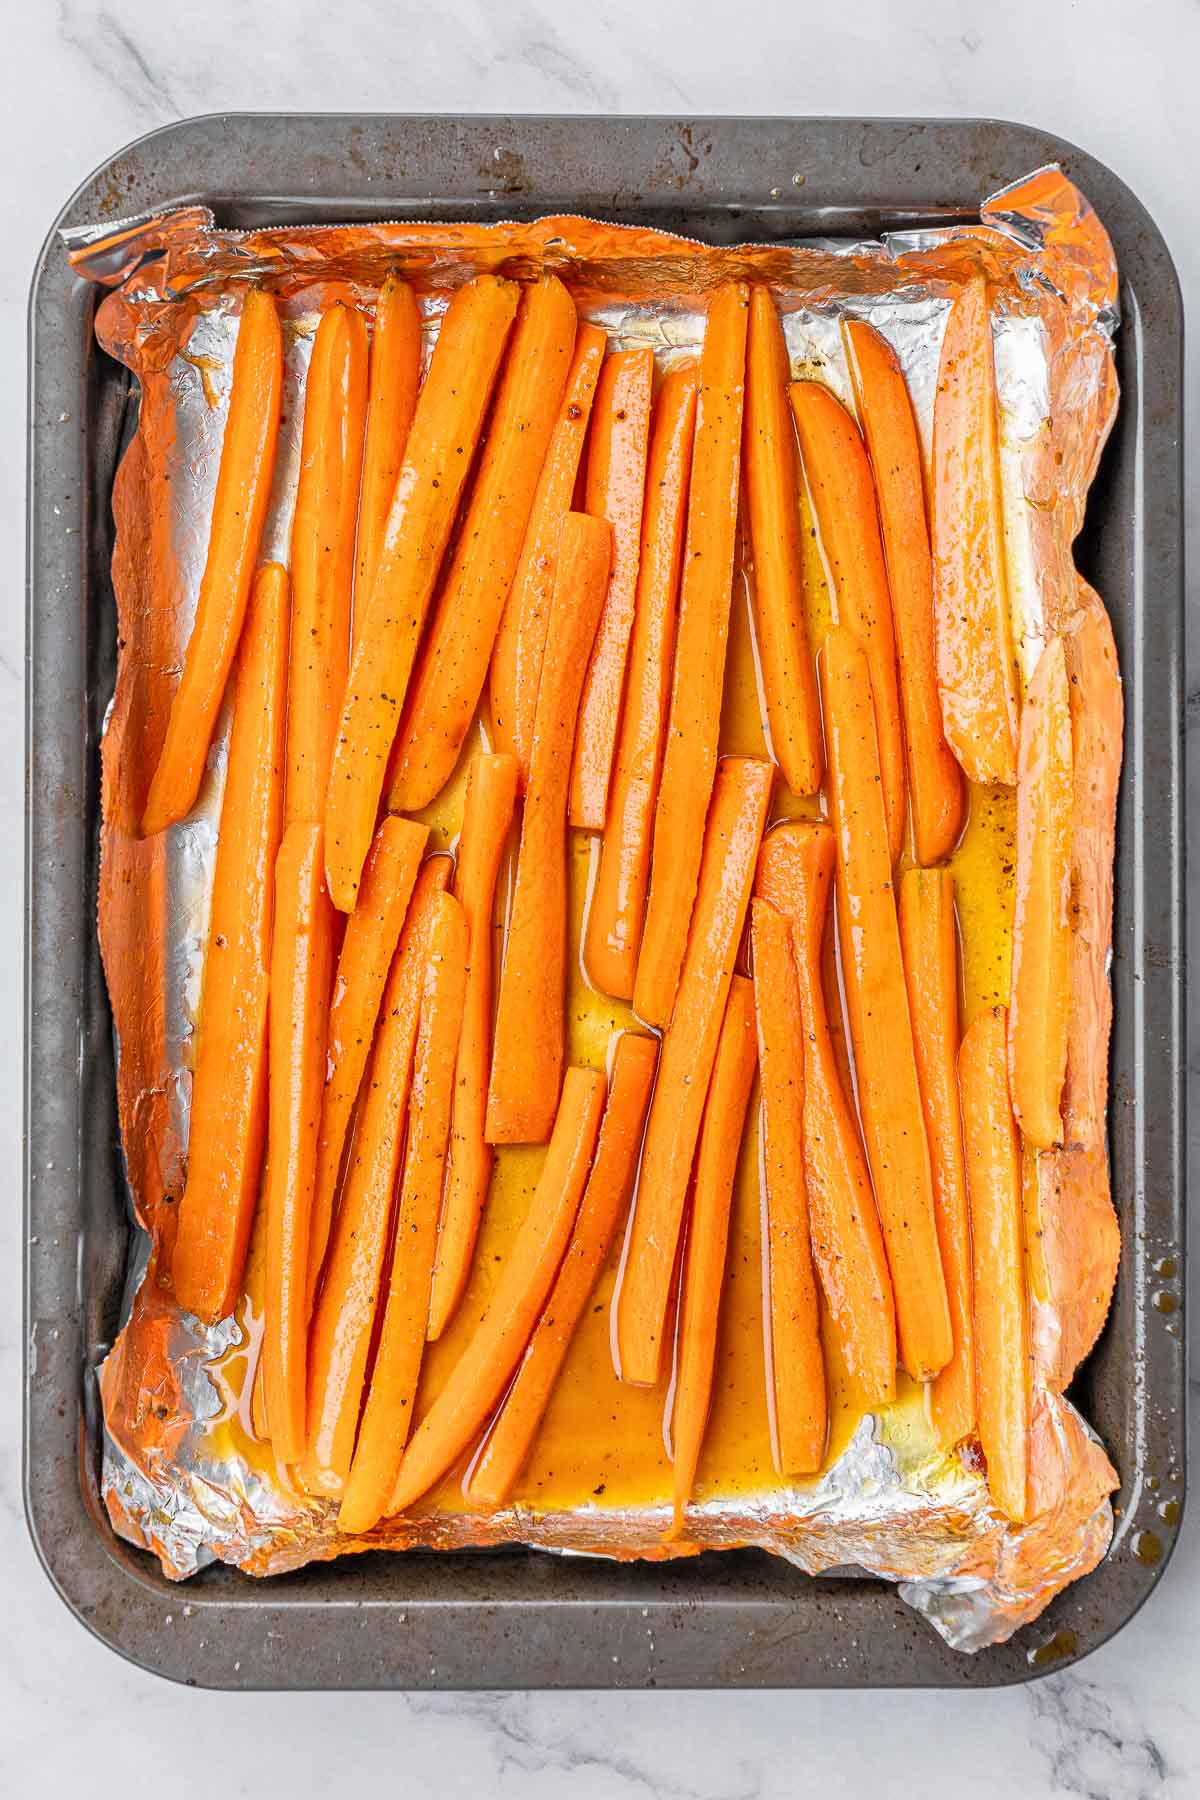 Glazed carrot slices on a baking sheet.